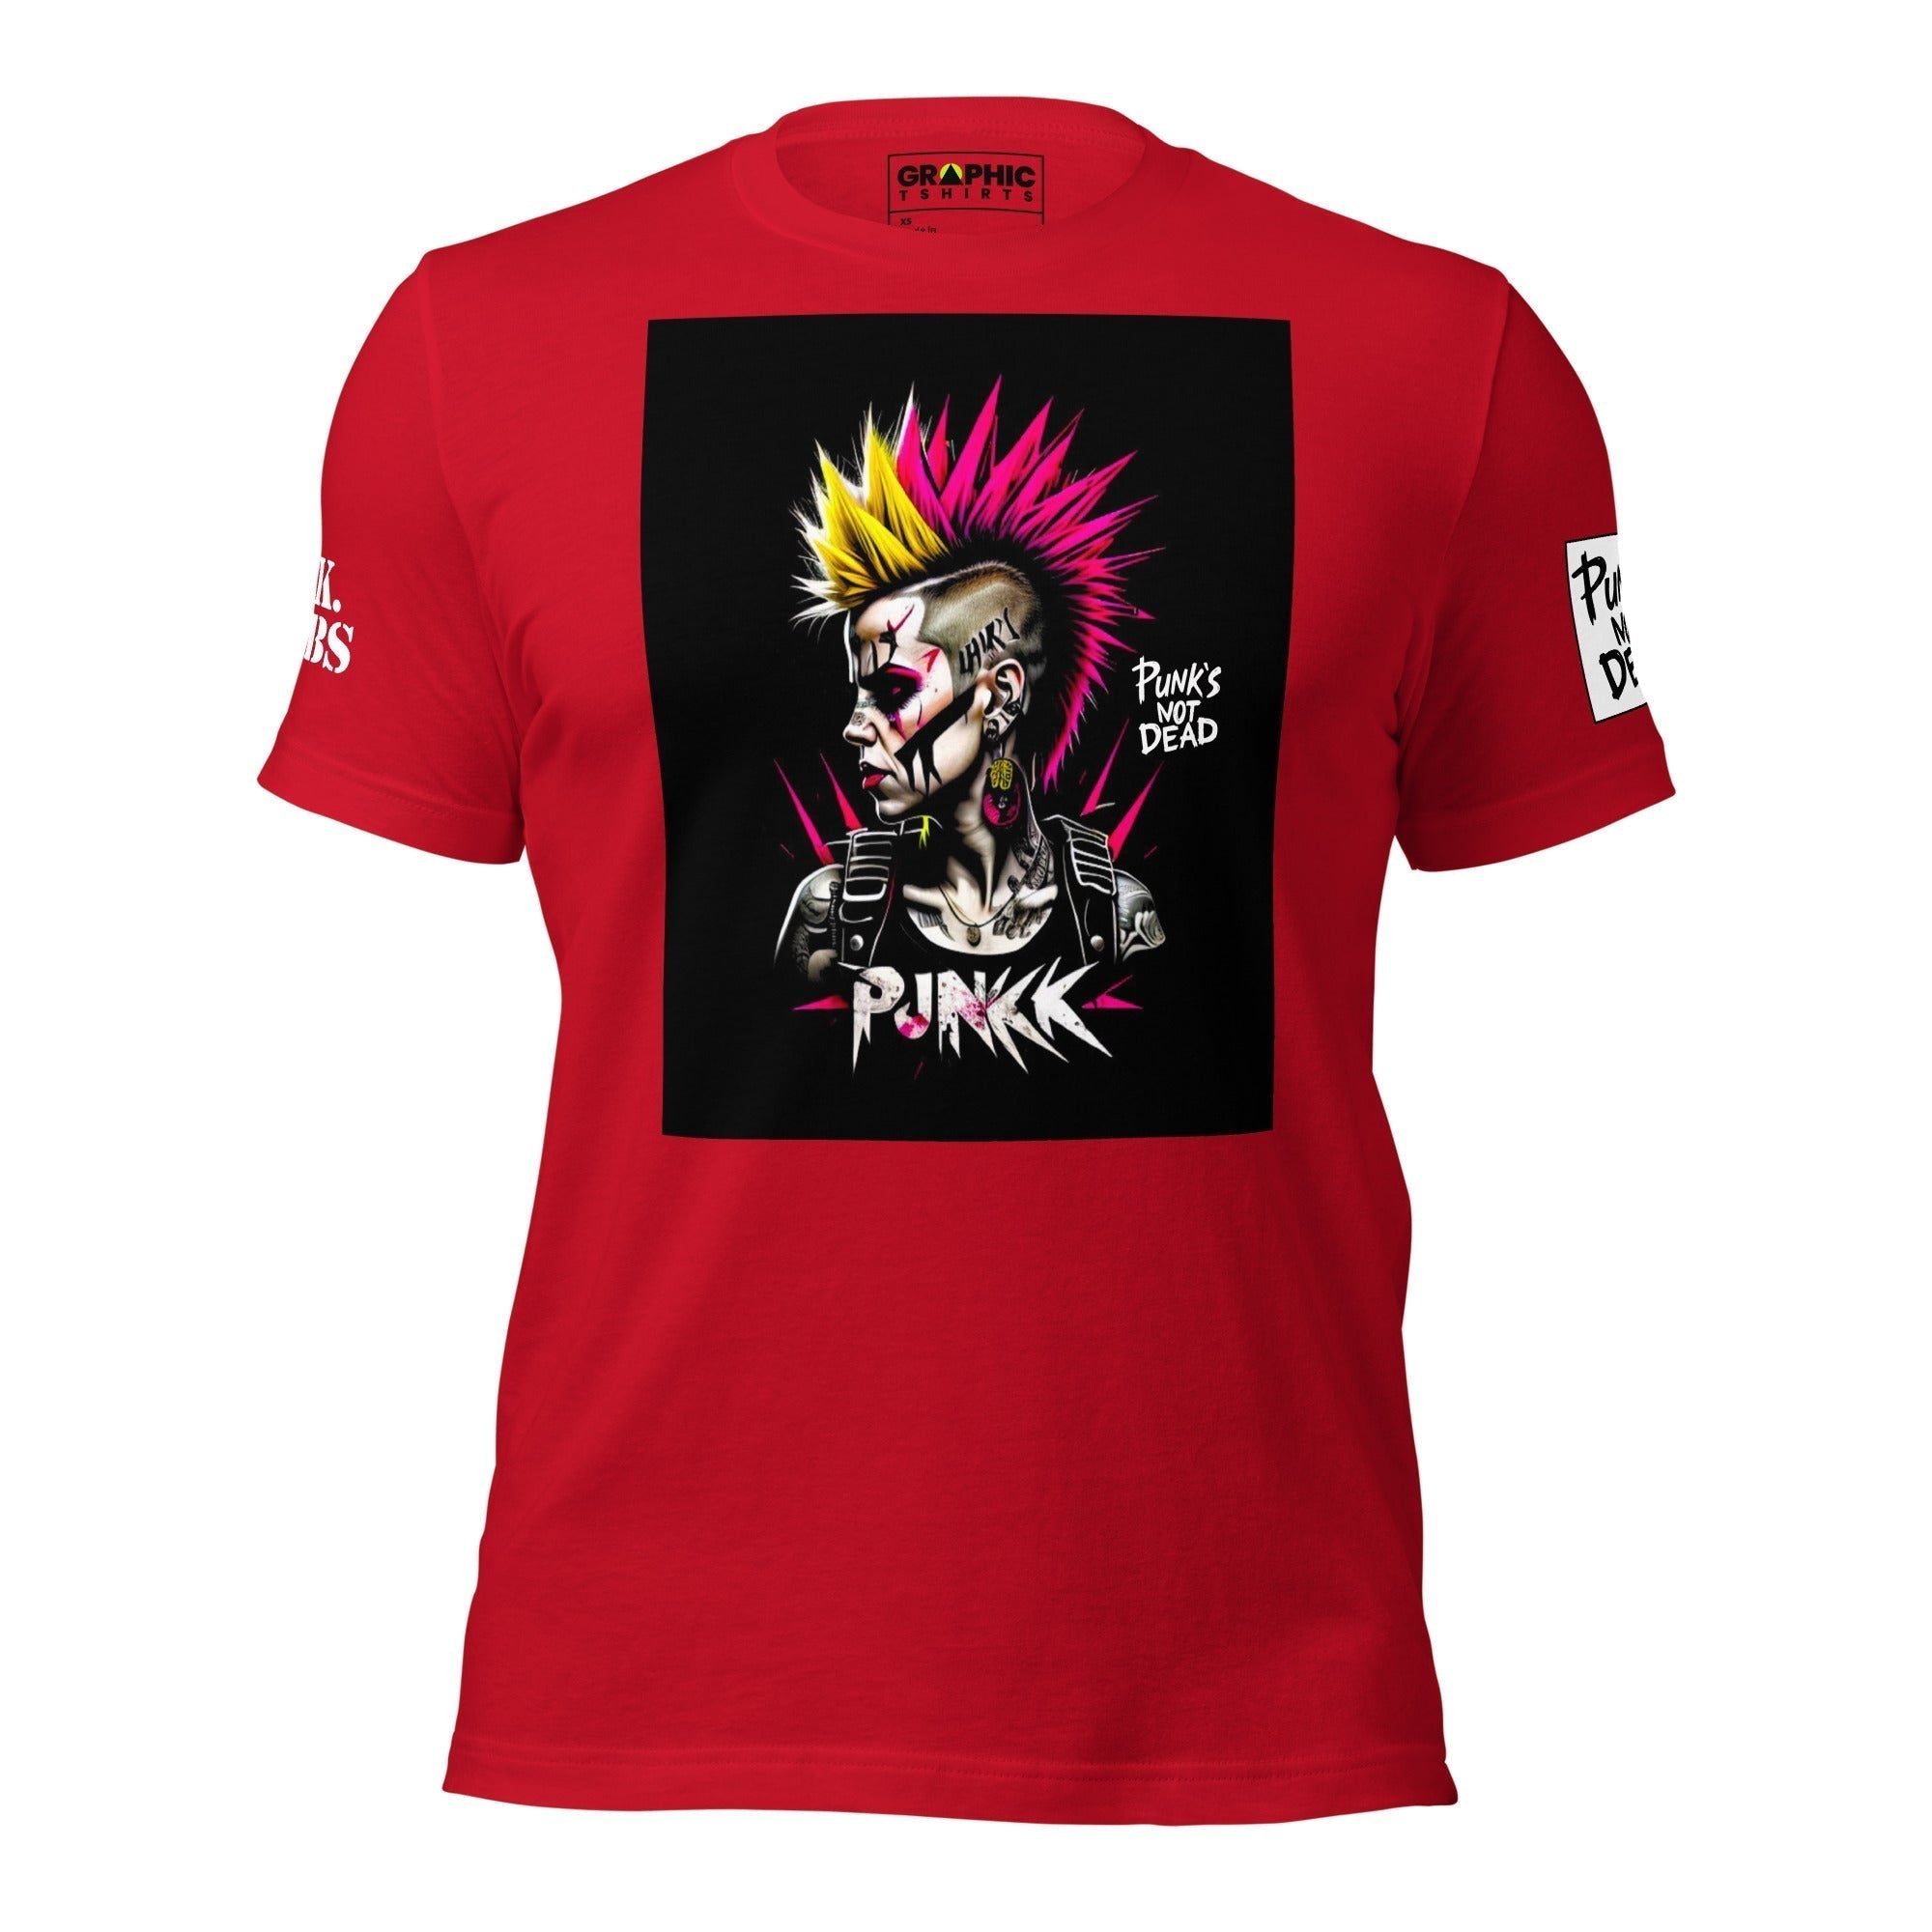 Unisex Crew Neck T-Shirt - Punk Rock Series Sector 8 - GRAPHIC T-SHIRTS